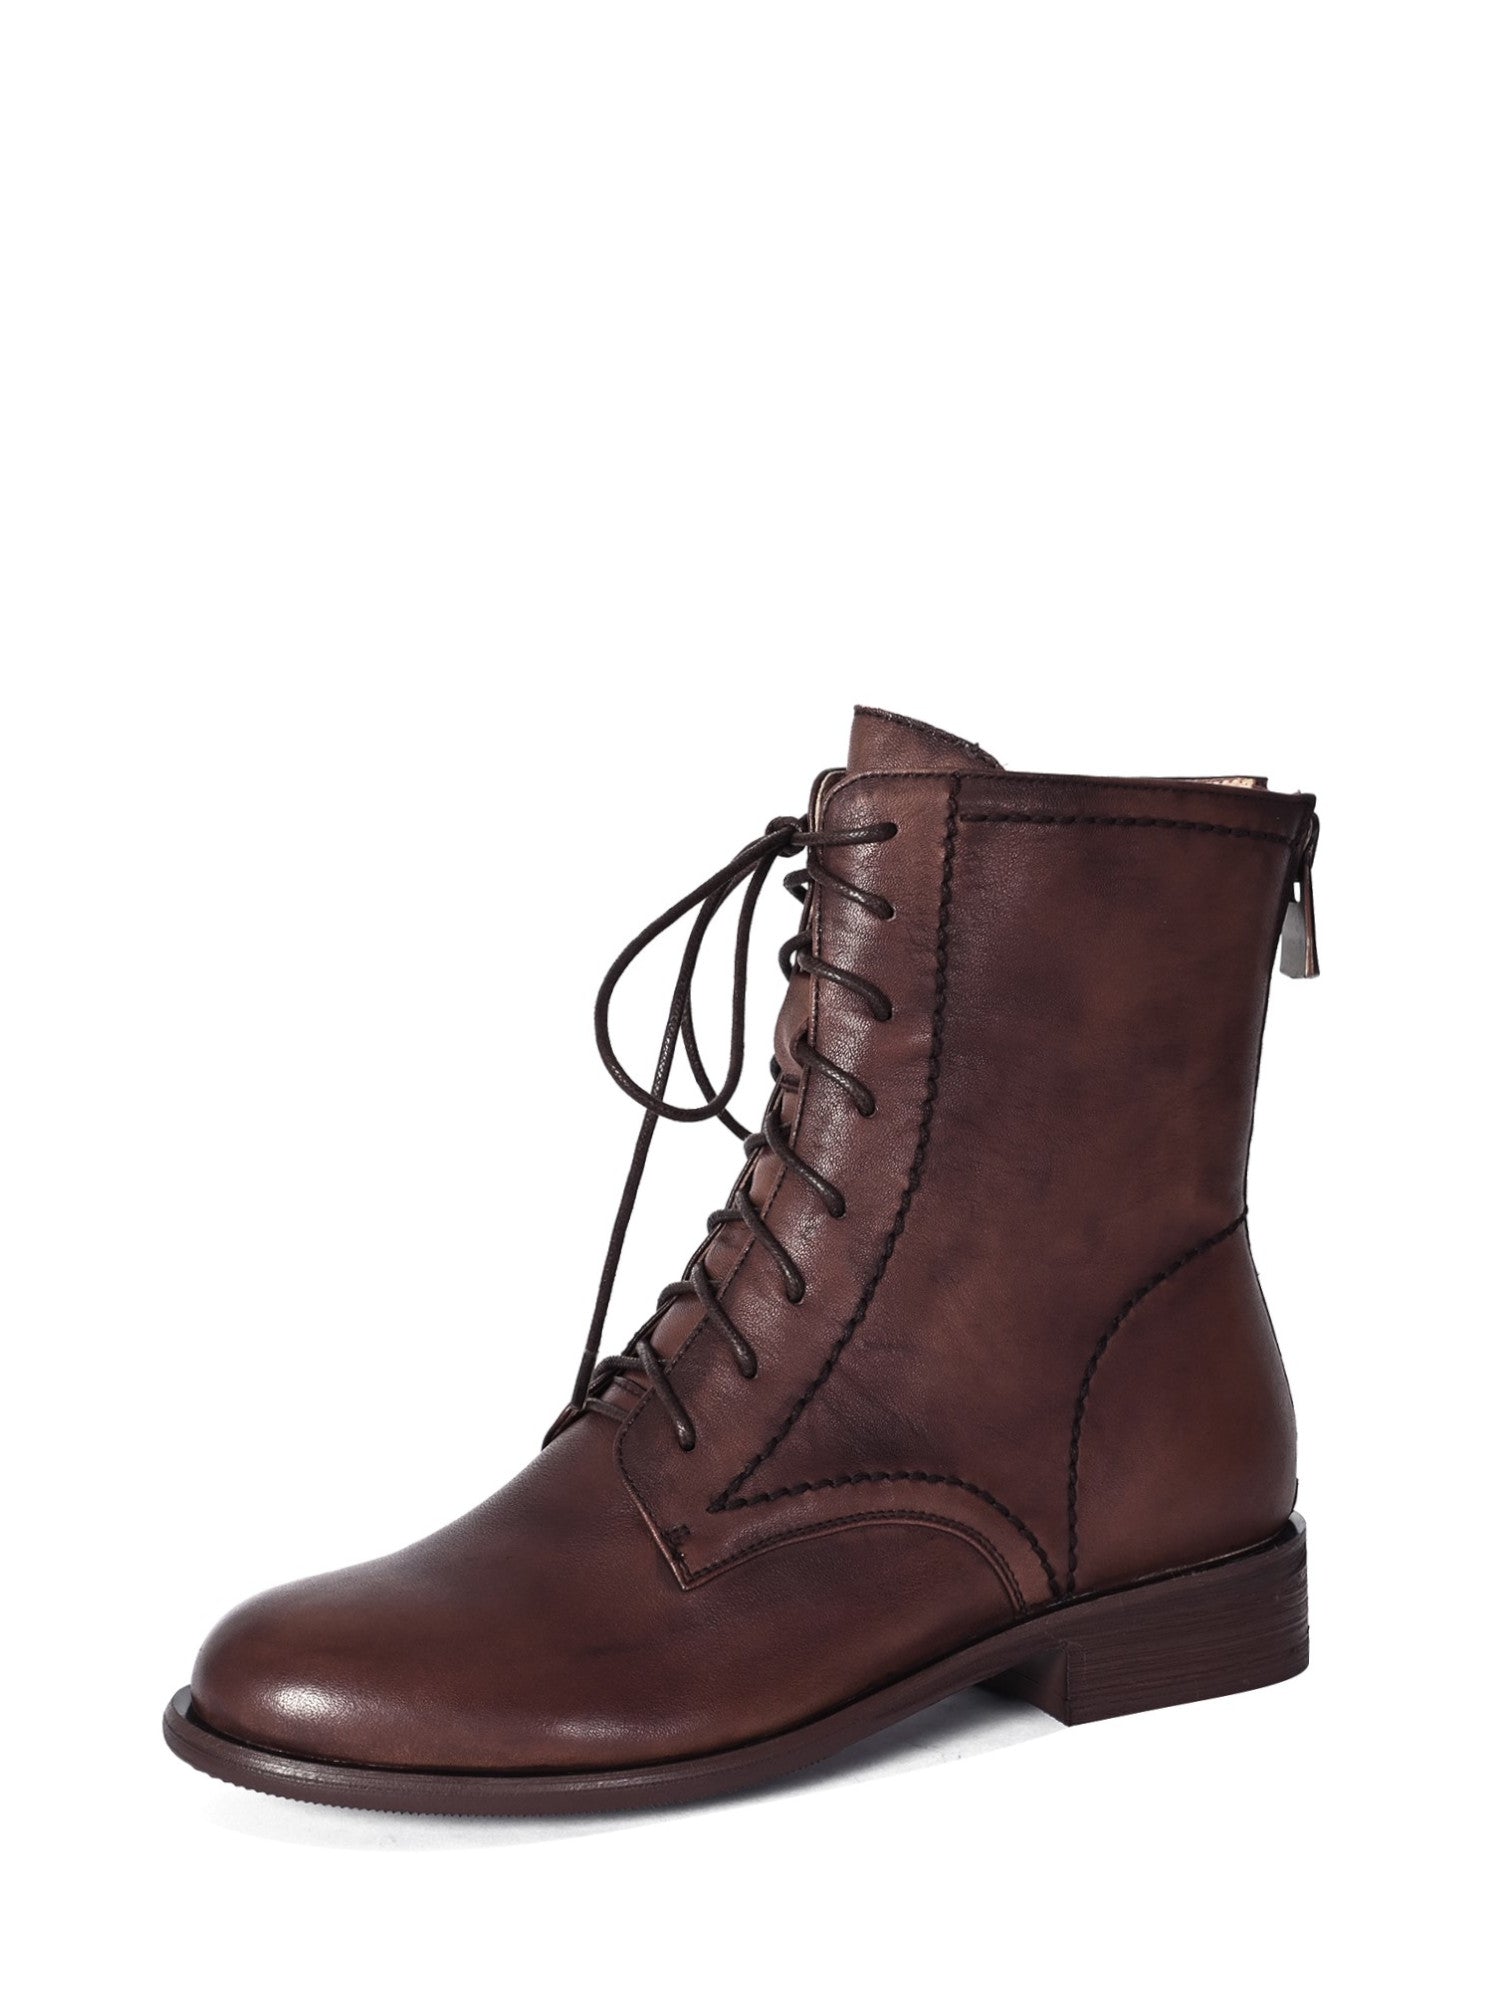 Attitudist Brown Velvet Upper High Heels Pocket Boots For Men at Rs 2499.00  | Men Leather Boots | ID: 2850640723412